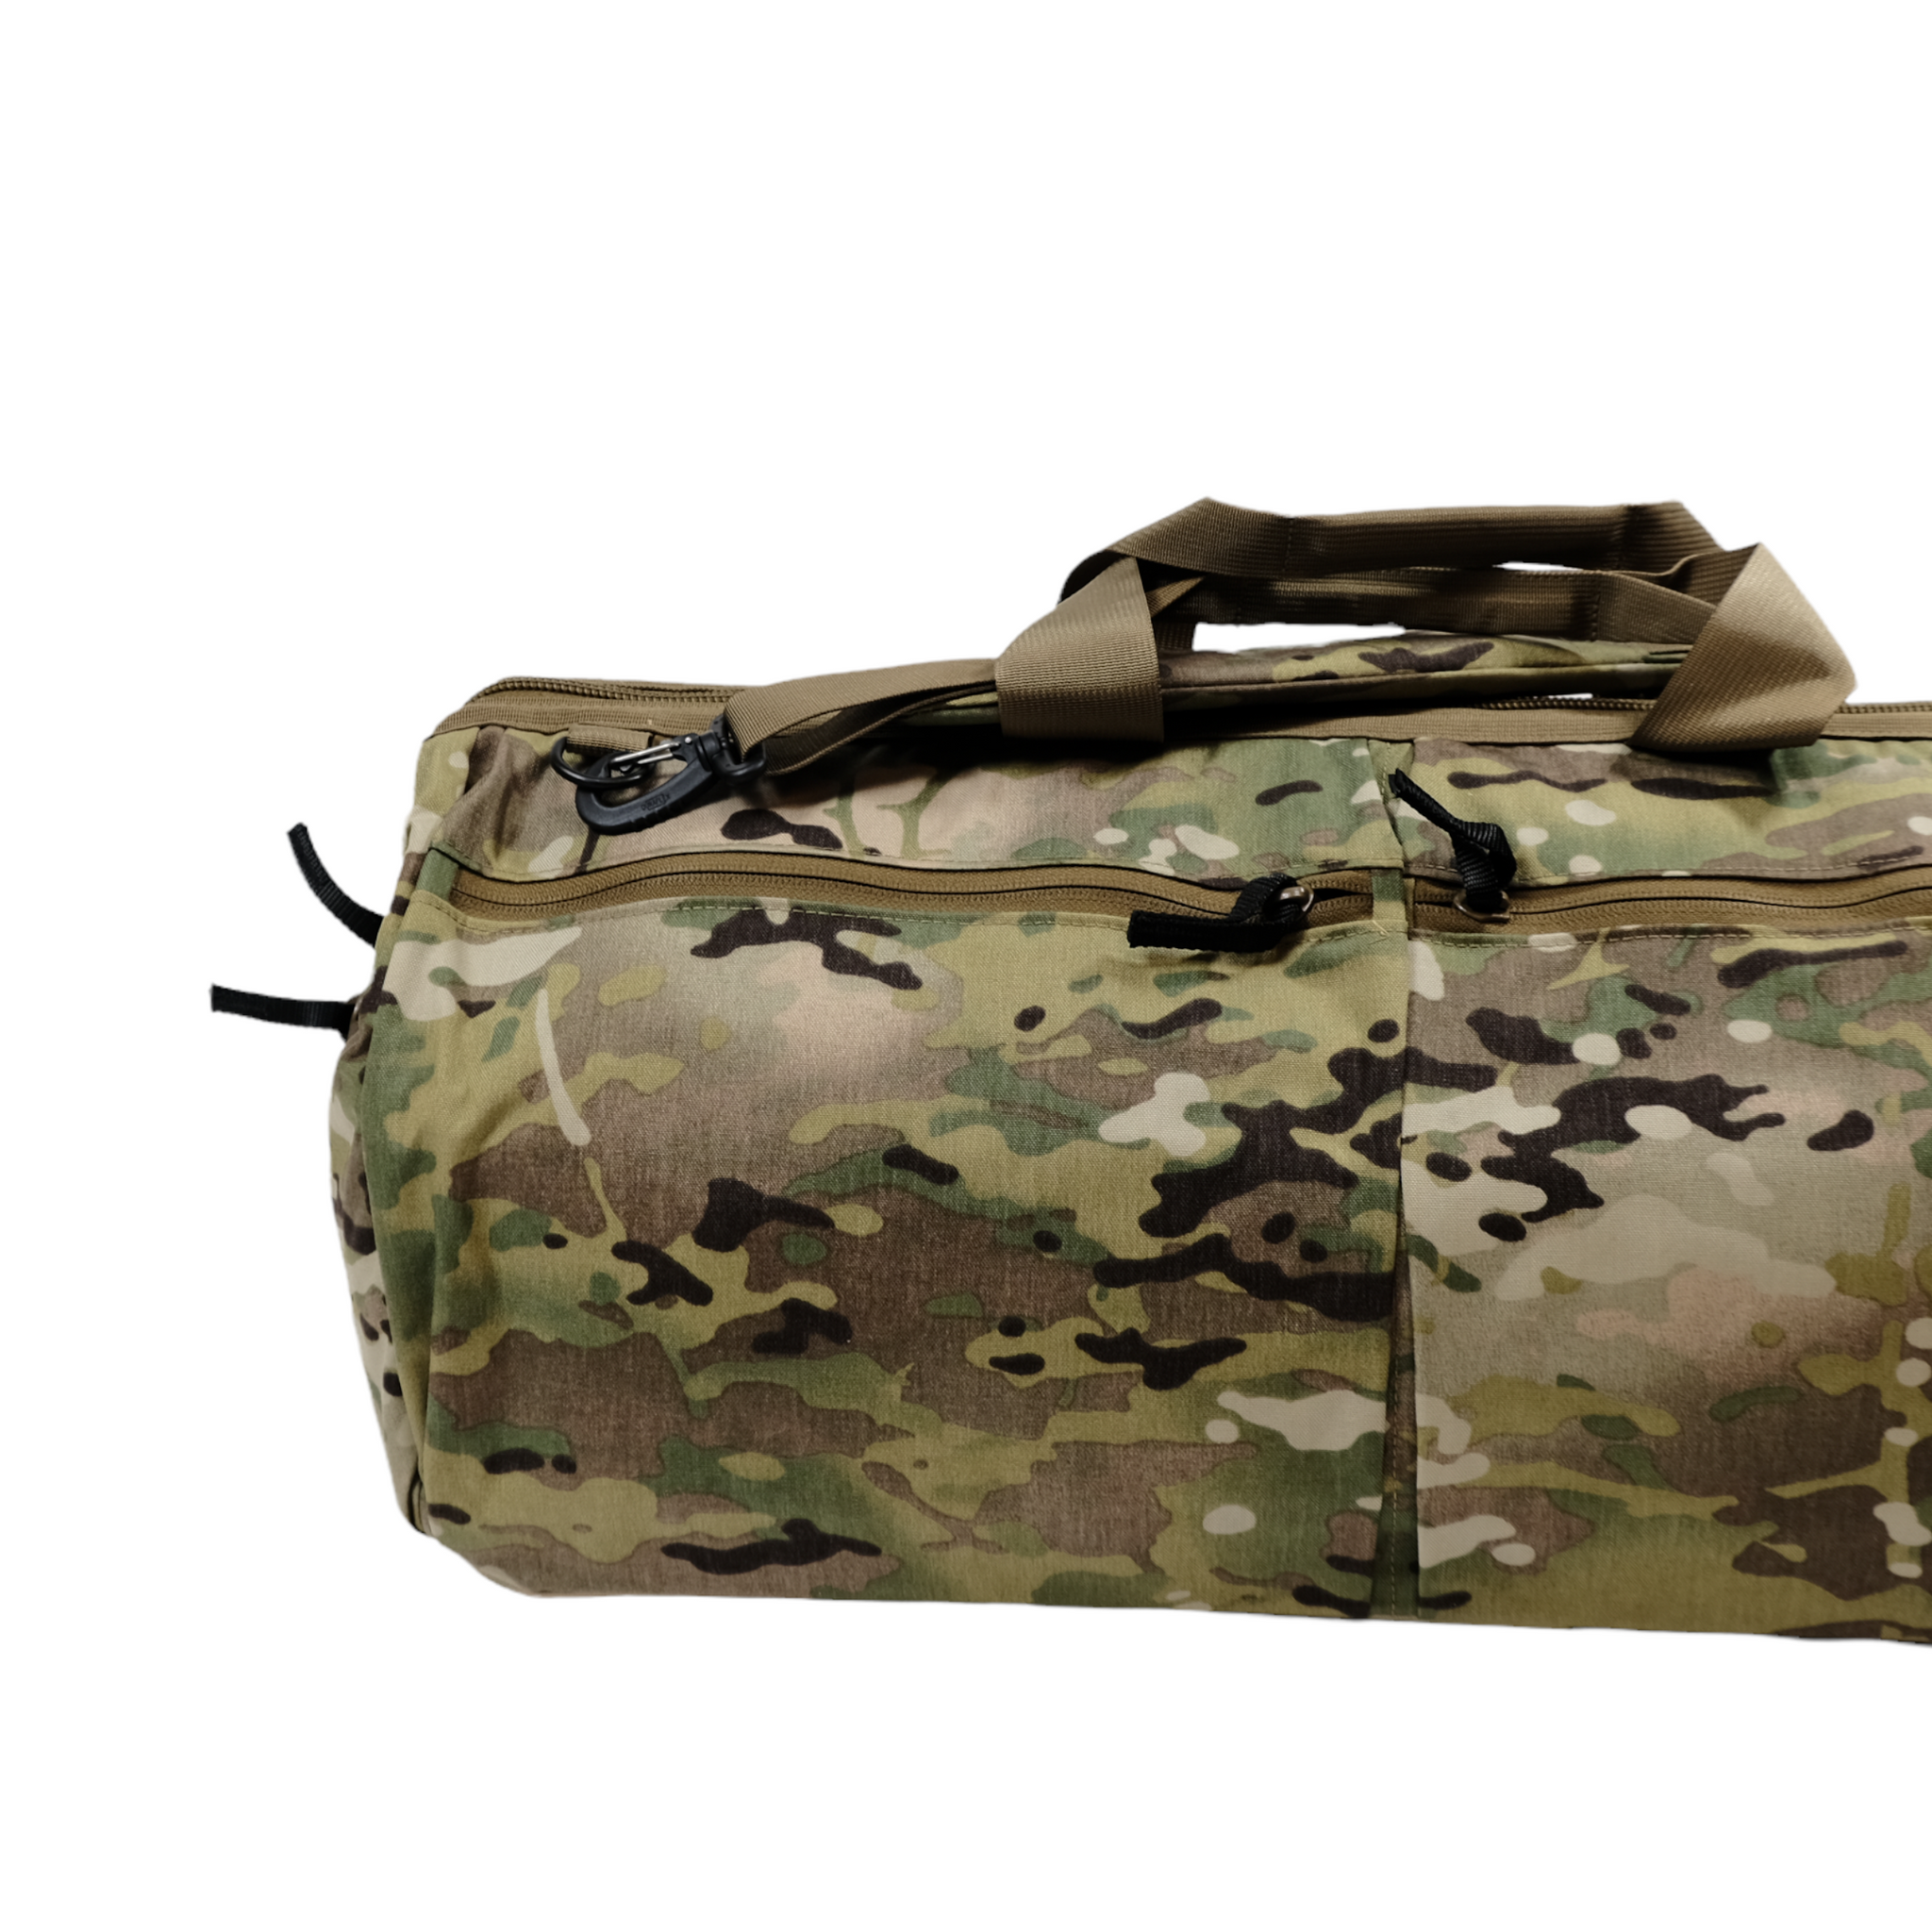 Multicam Tactical Range Bag, Gun Range Bag